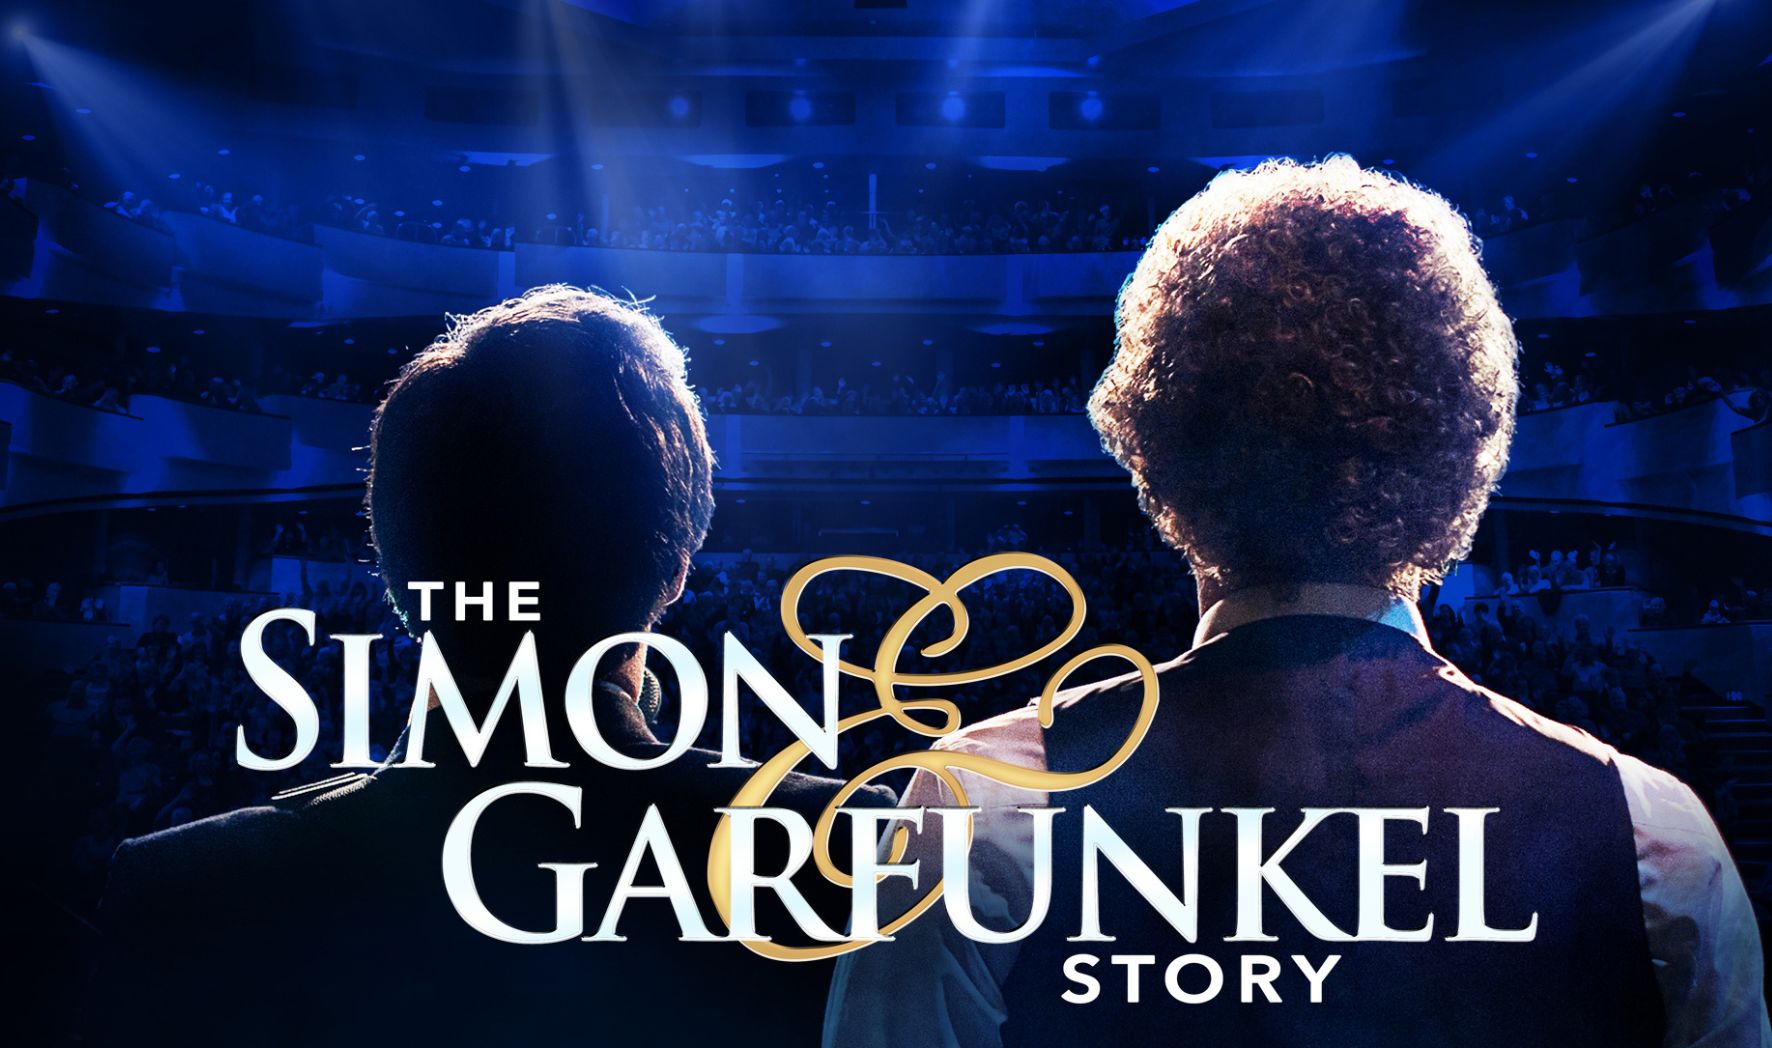 The Simon & Garfunkel Story Columbus Association for the Performing Arts